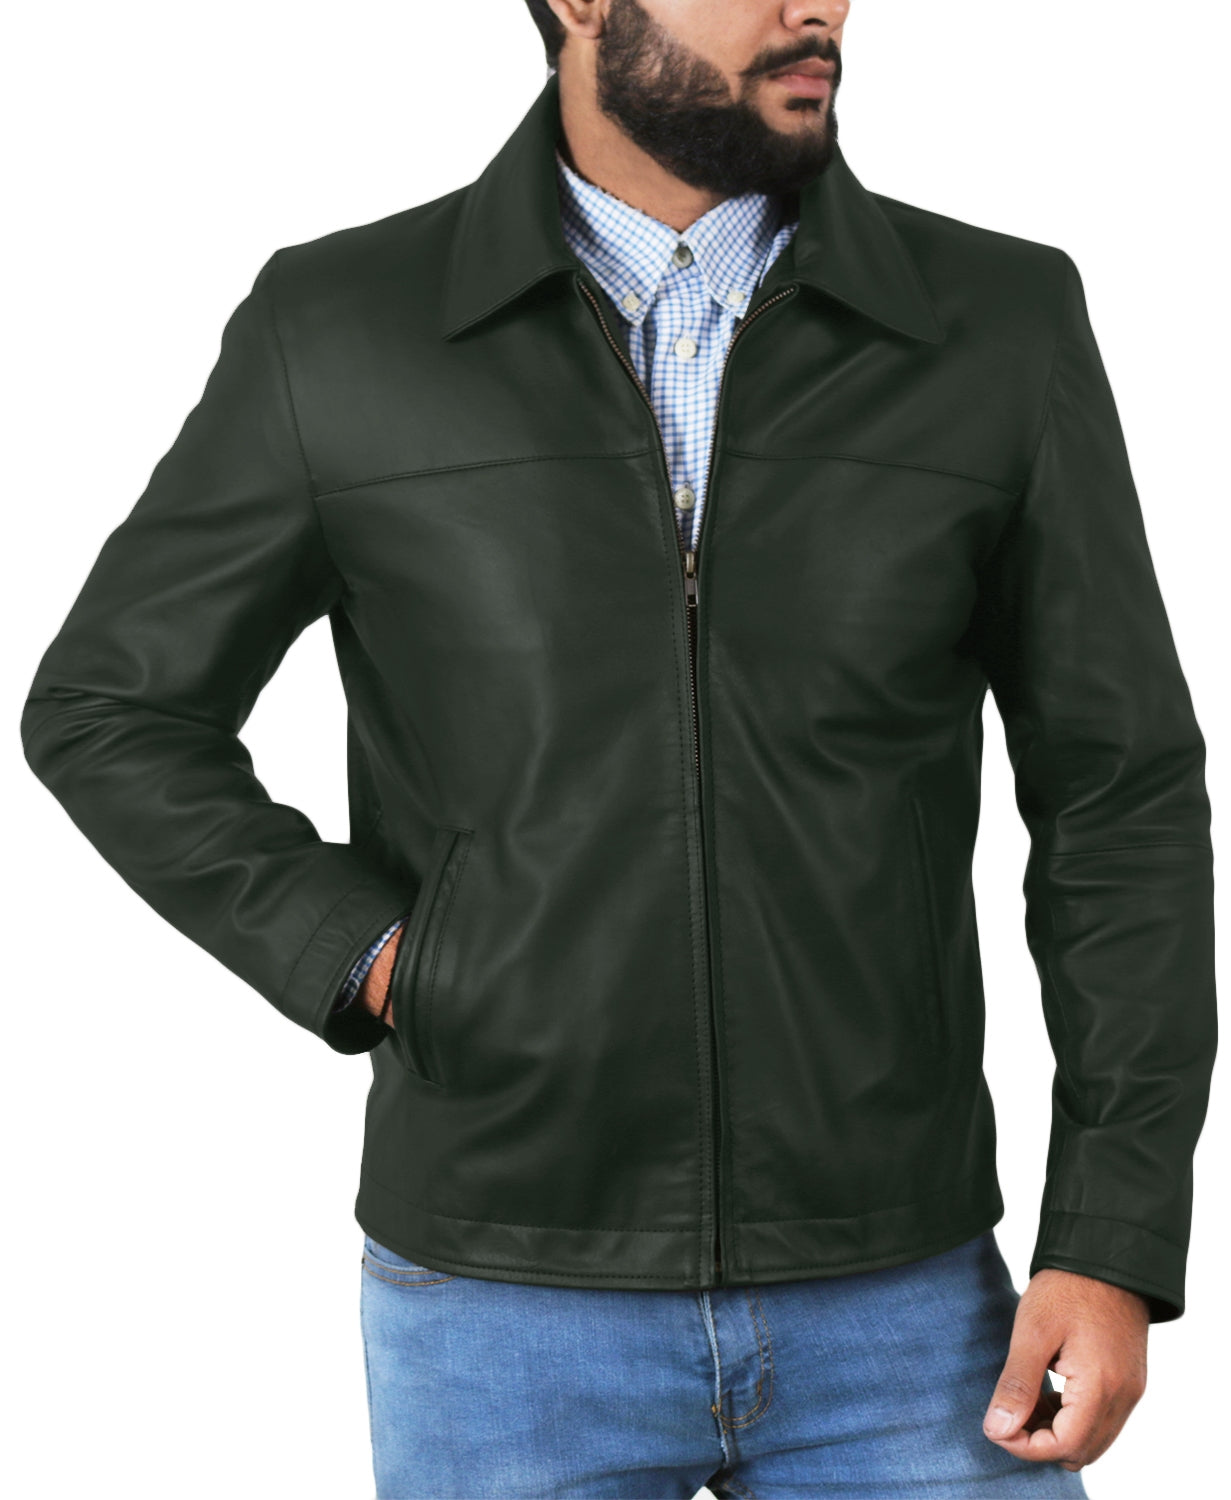 Leather Jackets Hub Mens Genuine Lambskin Leather Jacket (Black, Aviator Jacket) - 1501034